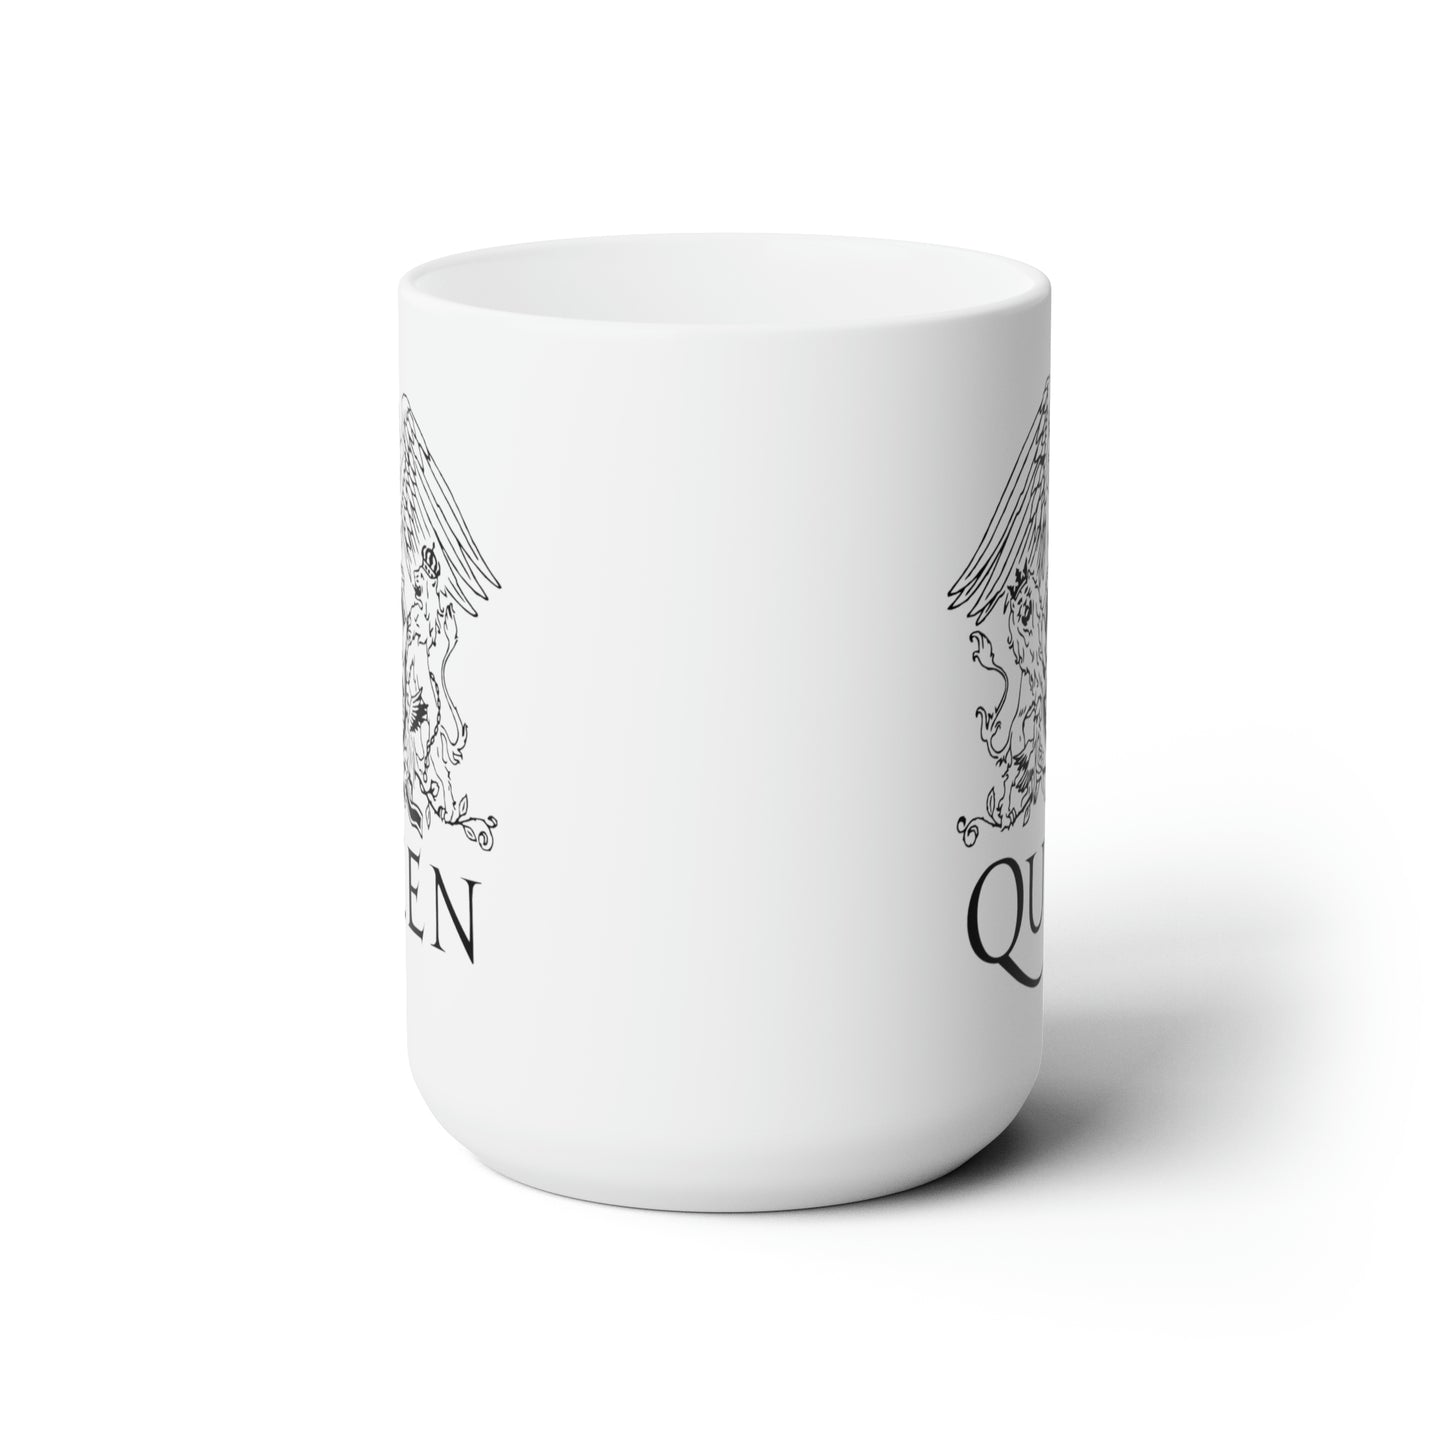 Queen Coffee Mug - Double Sided White Ceramic 15oz by TheGlassyLass.com